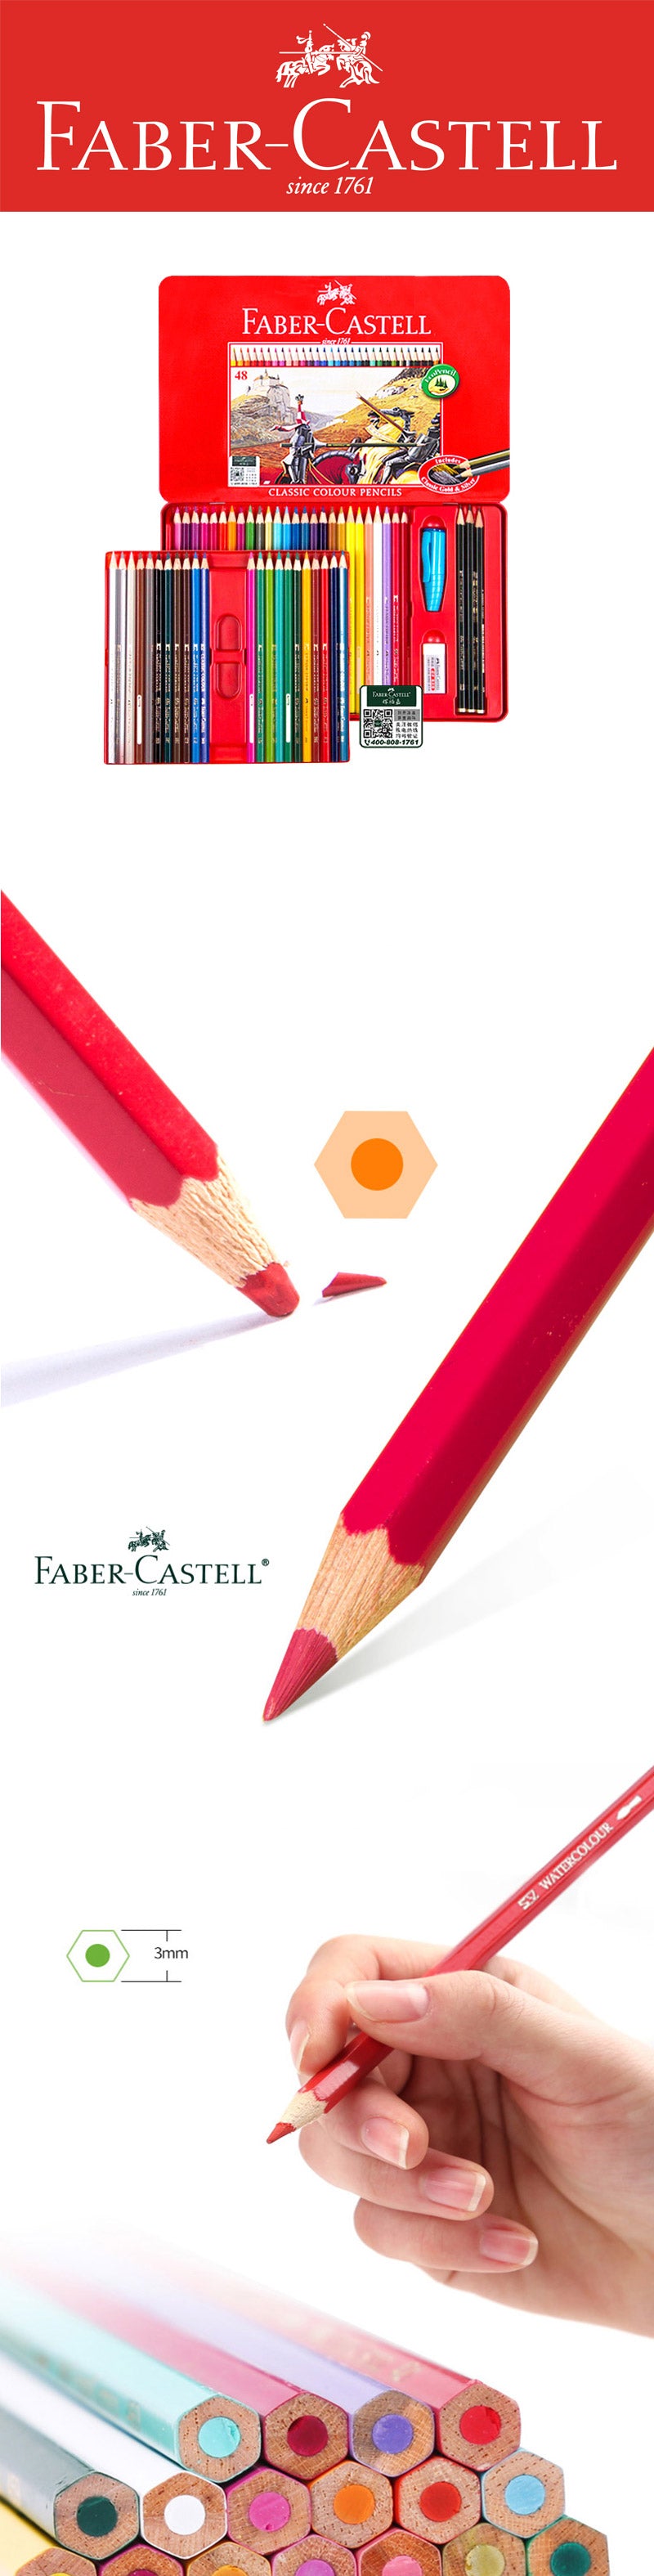 Faber-Castell Oil Colored Pencil Tin Case 48 / 60 / 100 Colors Set